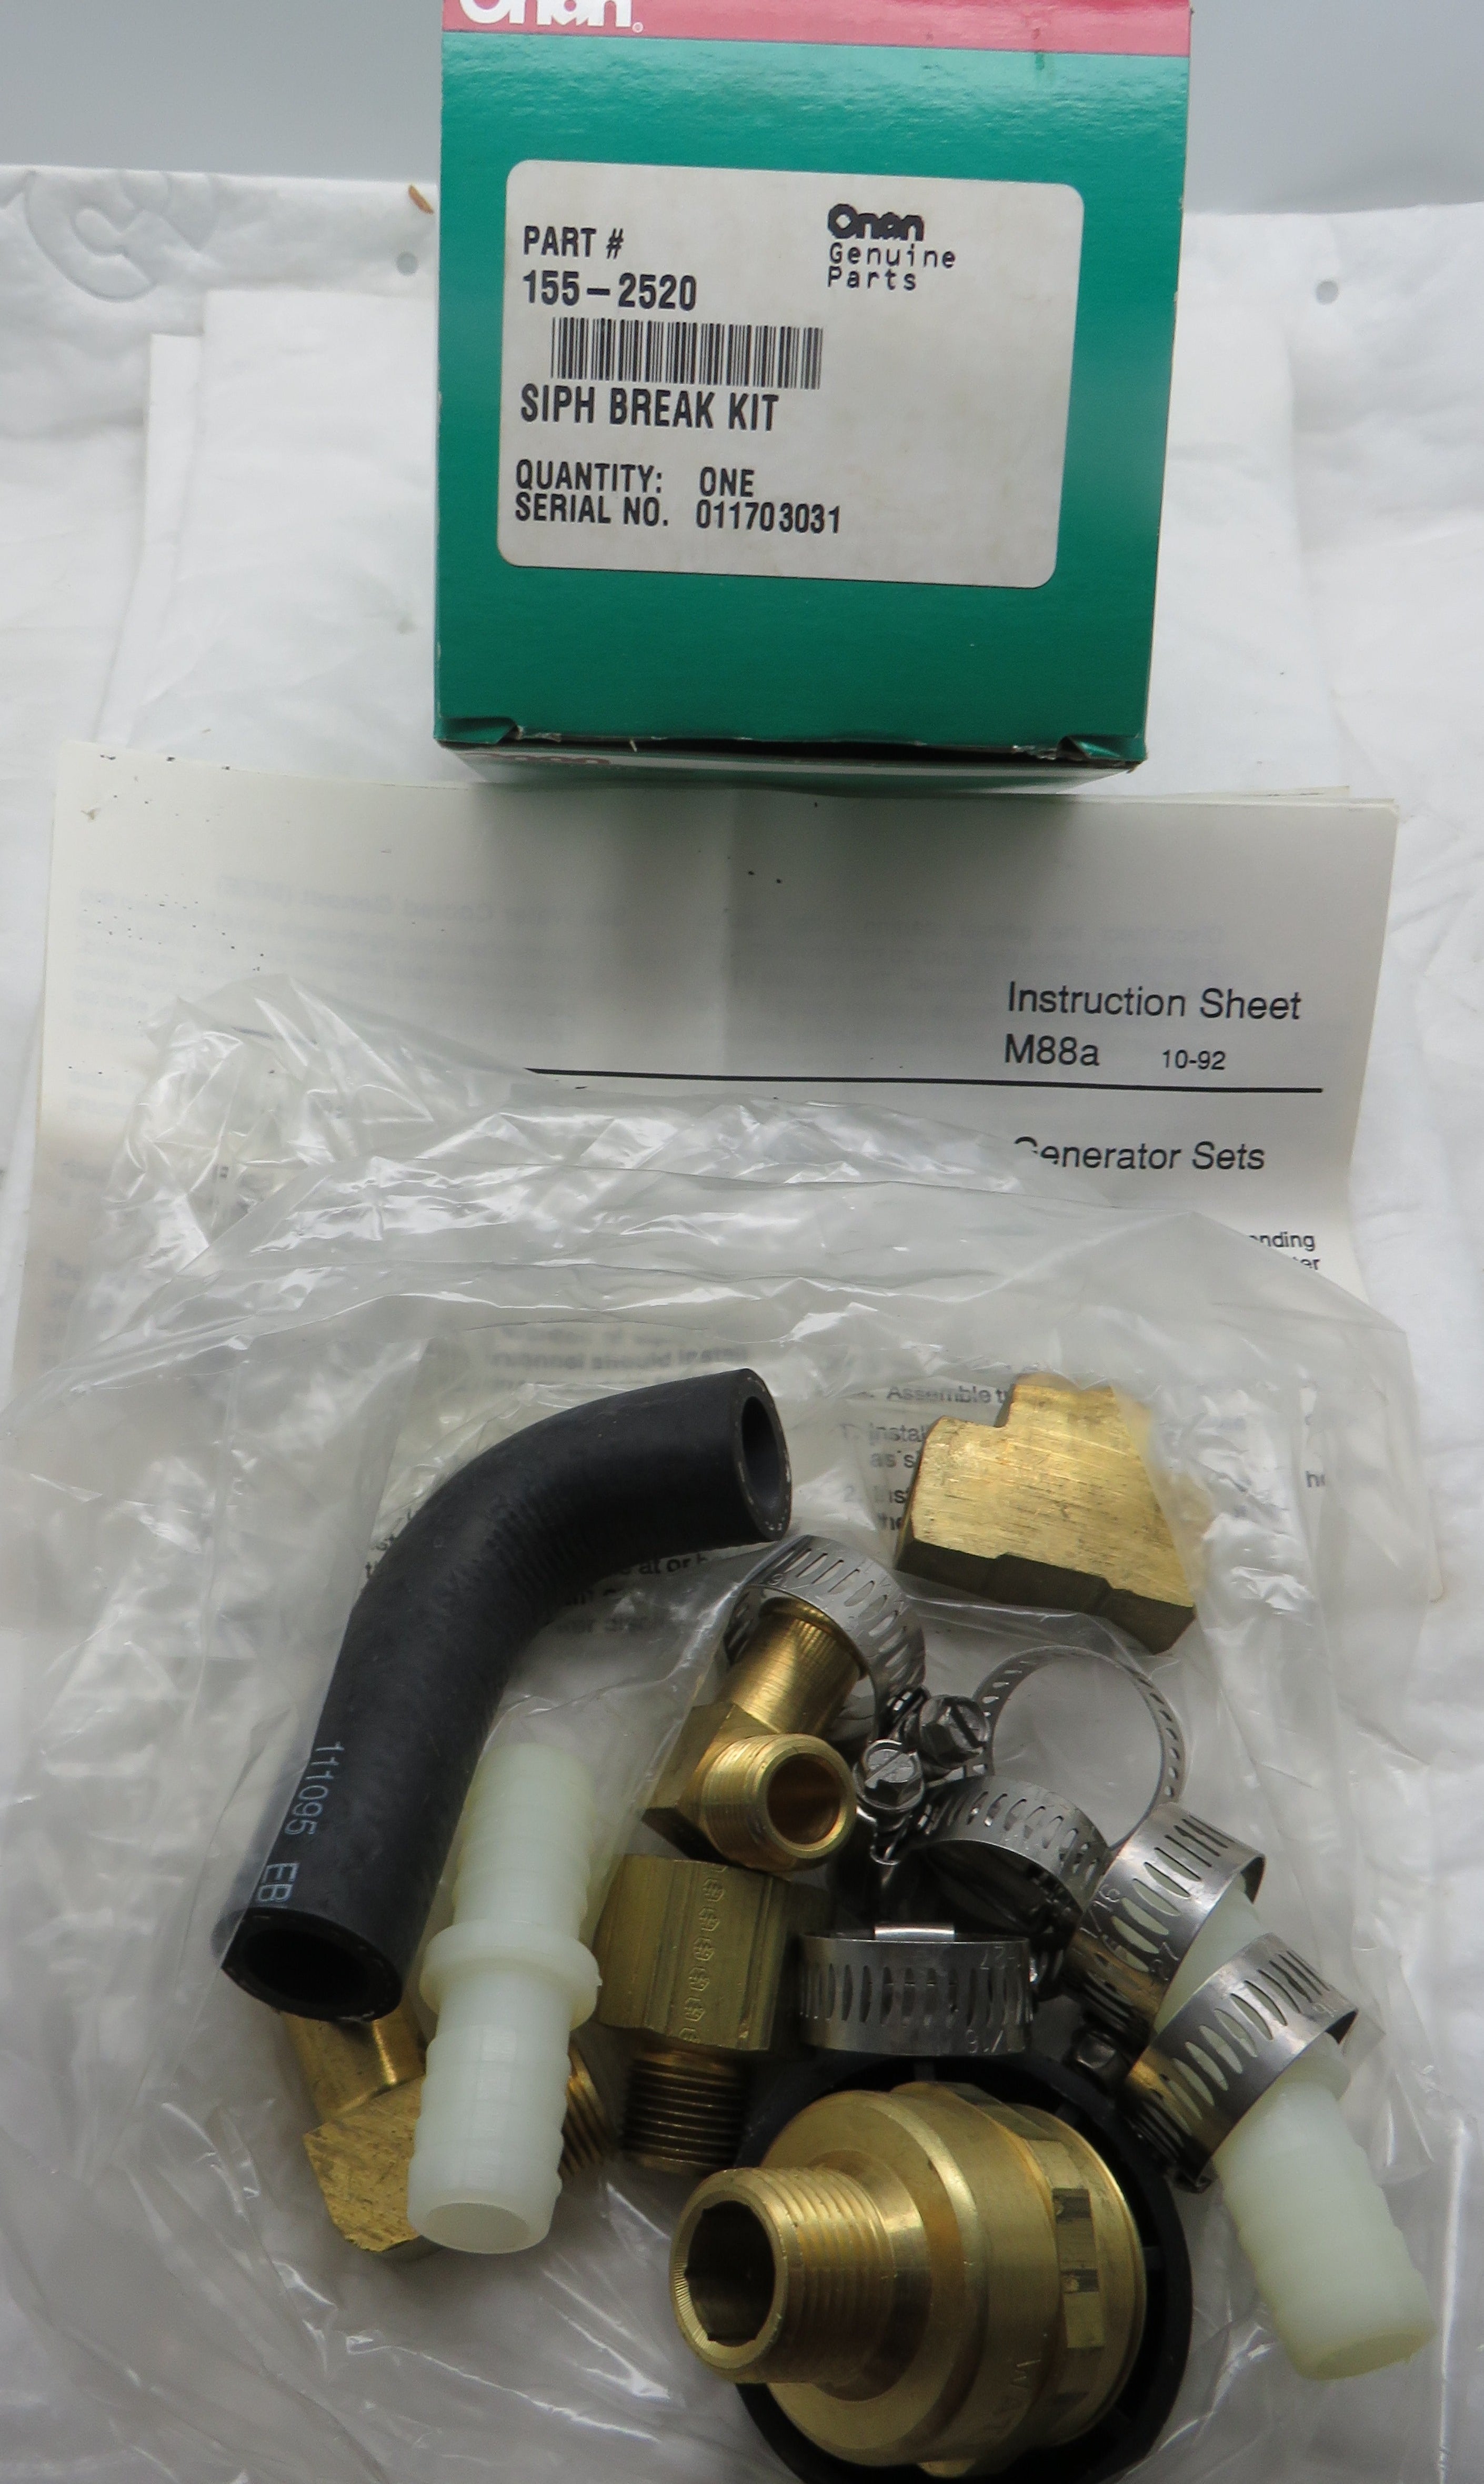 155-2520 Onan Siphon Breaker Kit (OBSOLETE) Superseded to 541-0863-02 Onan MDKUB, MDKWB, Admiral & Platinum Series 